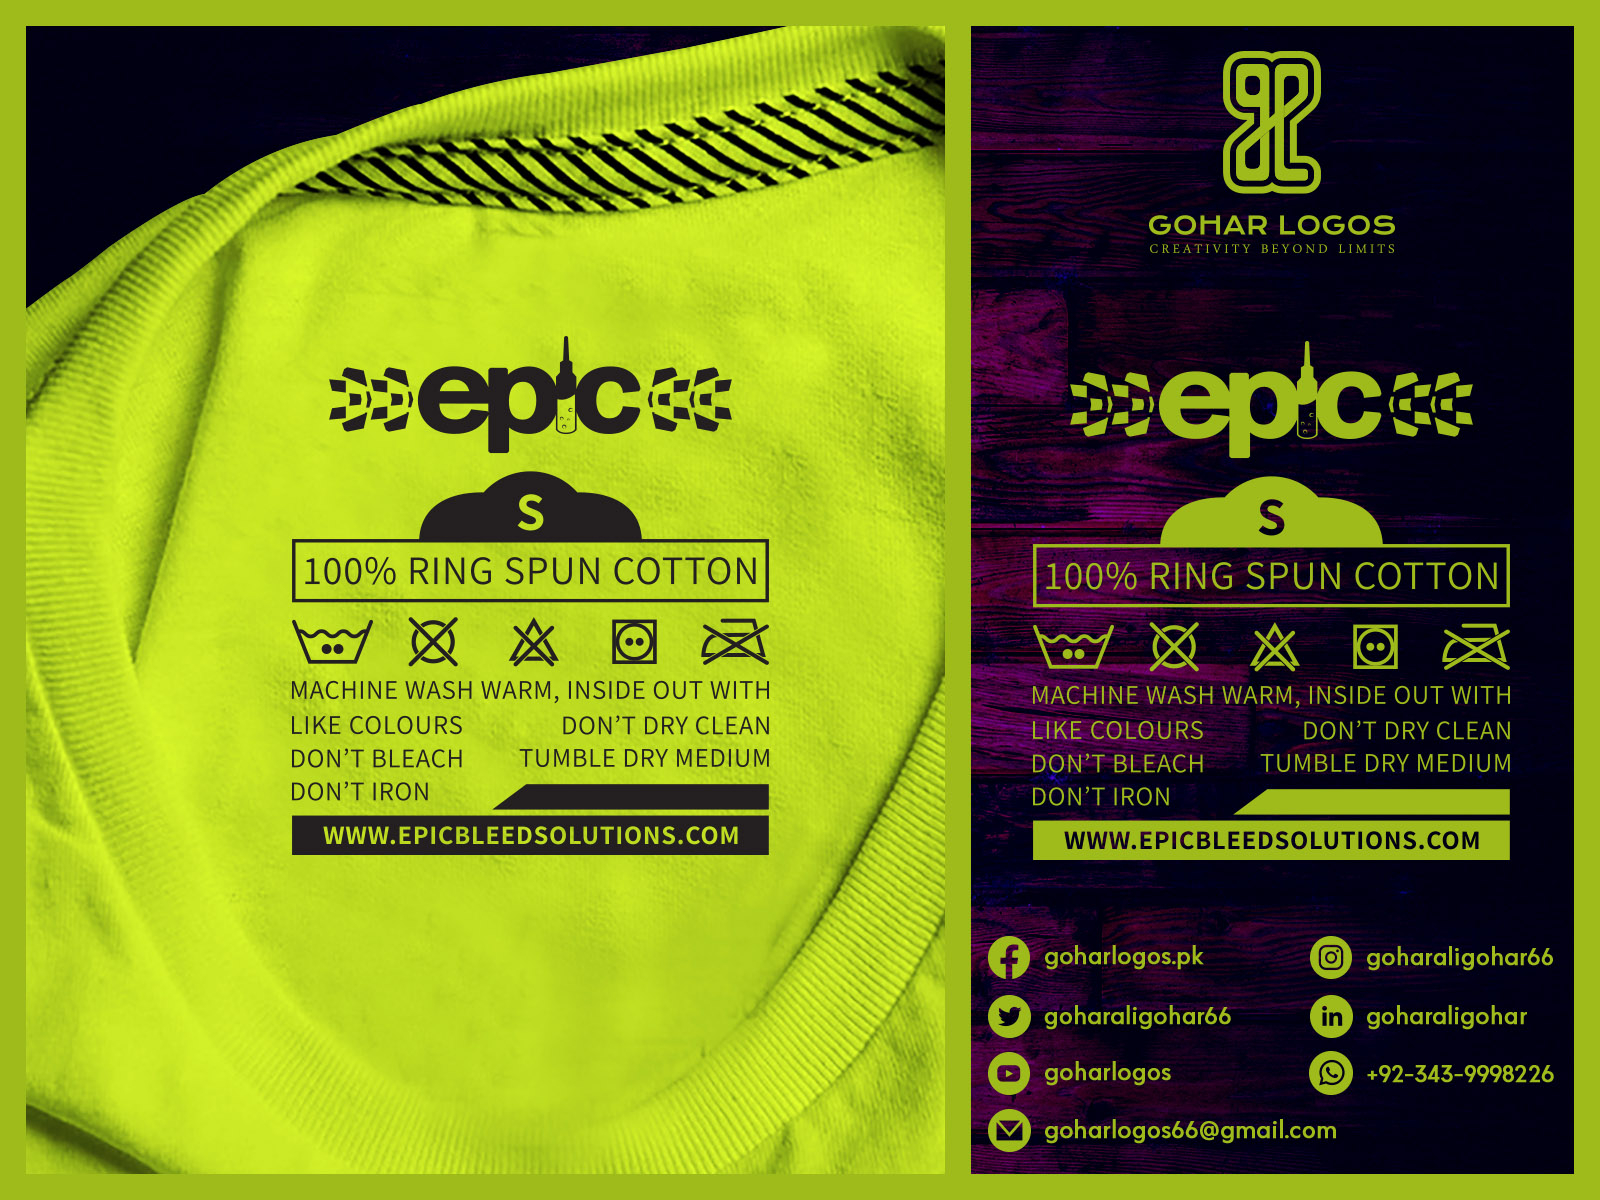 Epic Shirt Tag Design Presentation by Gohar Ali Gohar on Dribbble